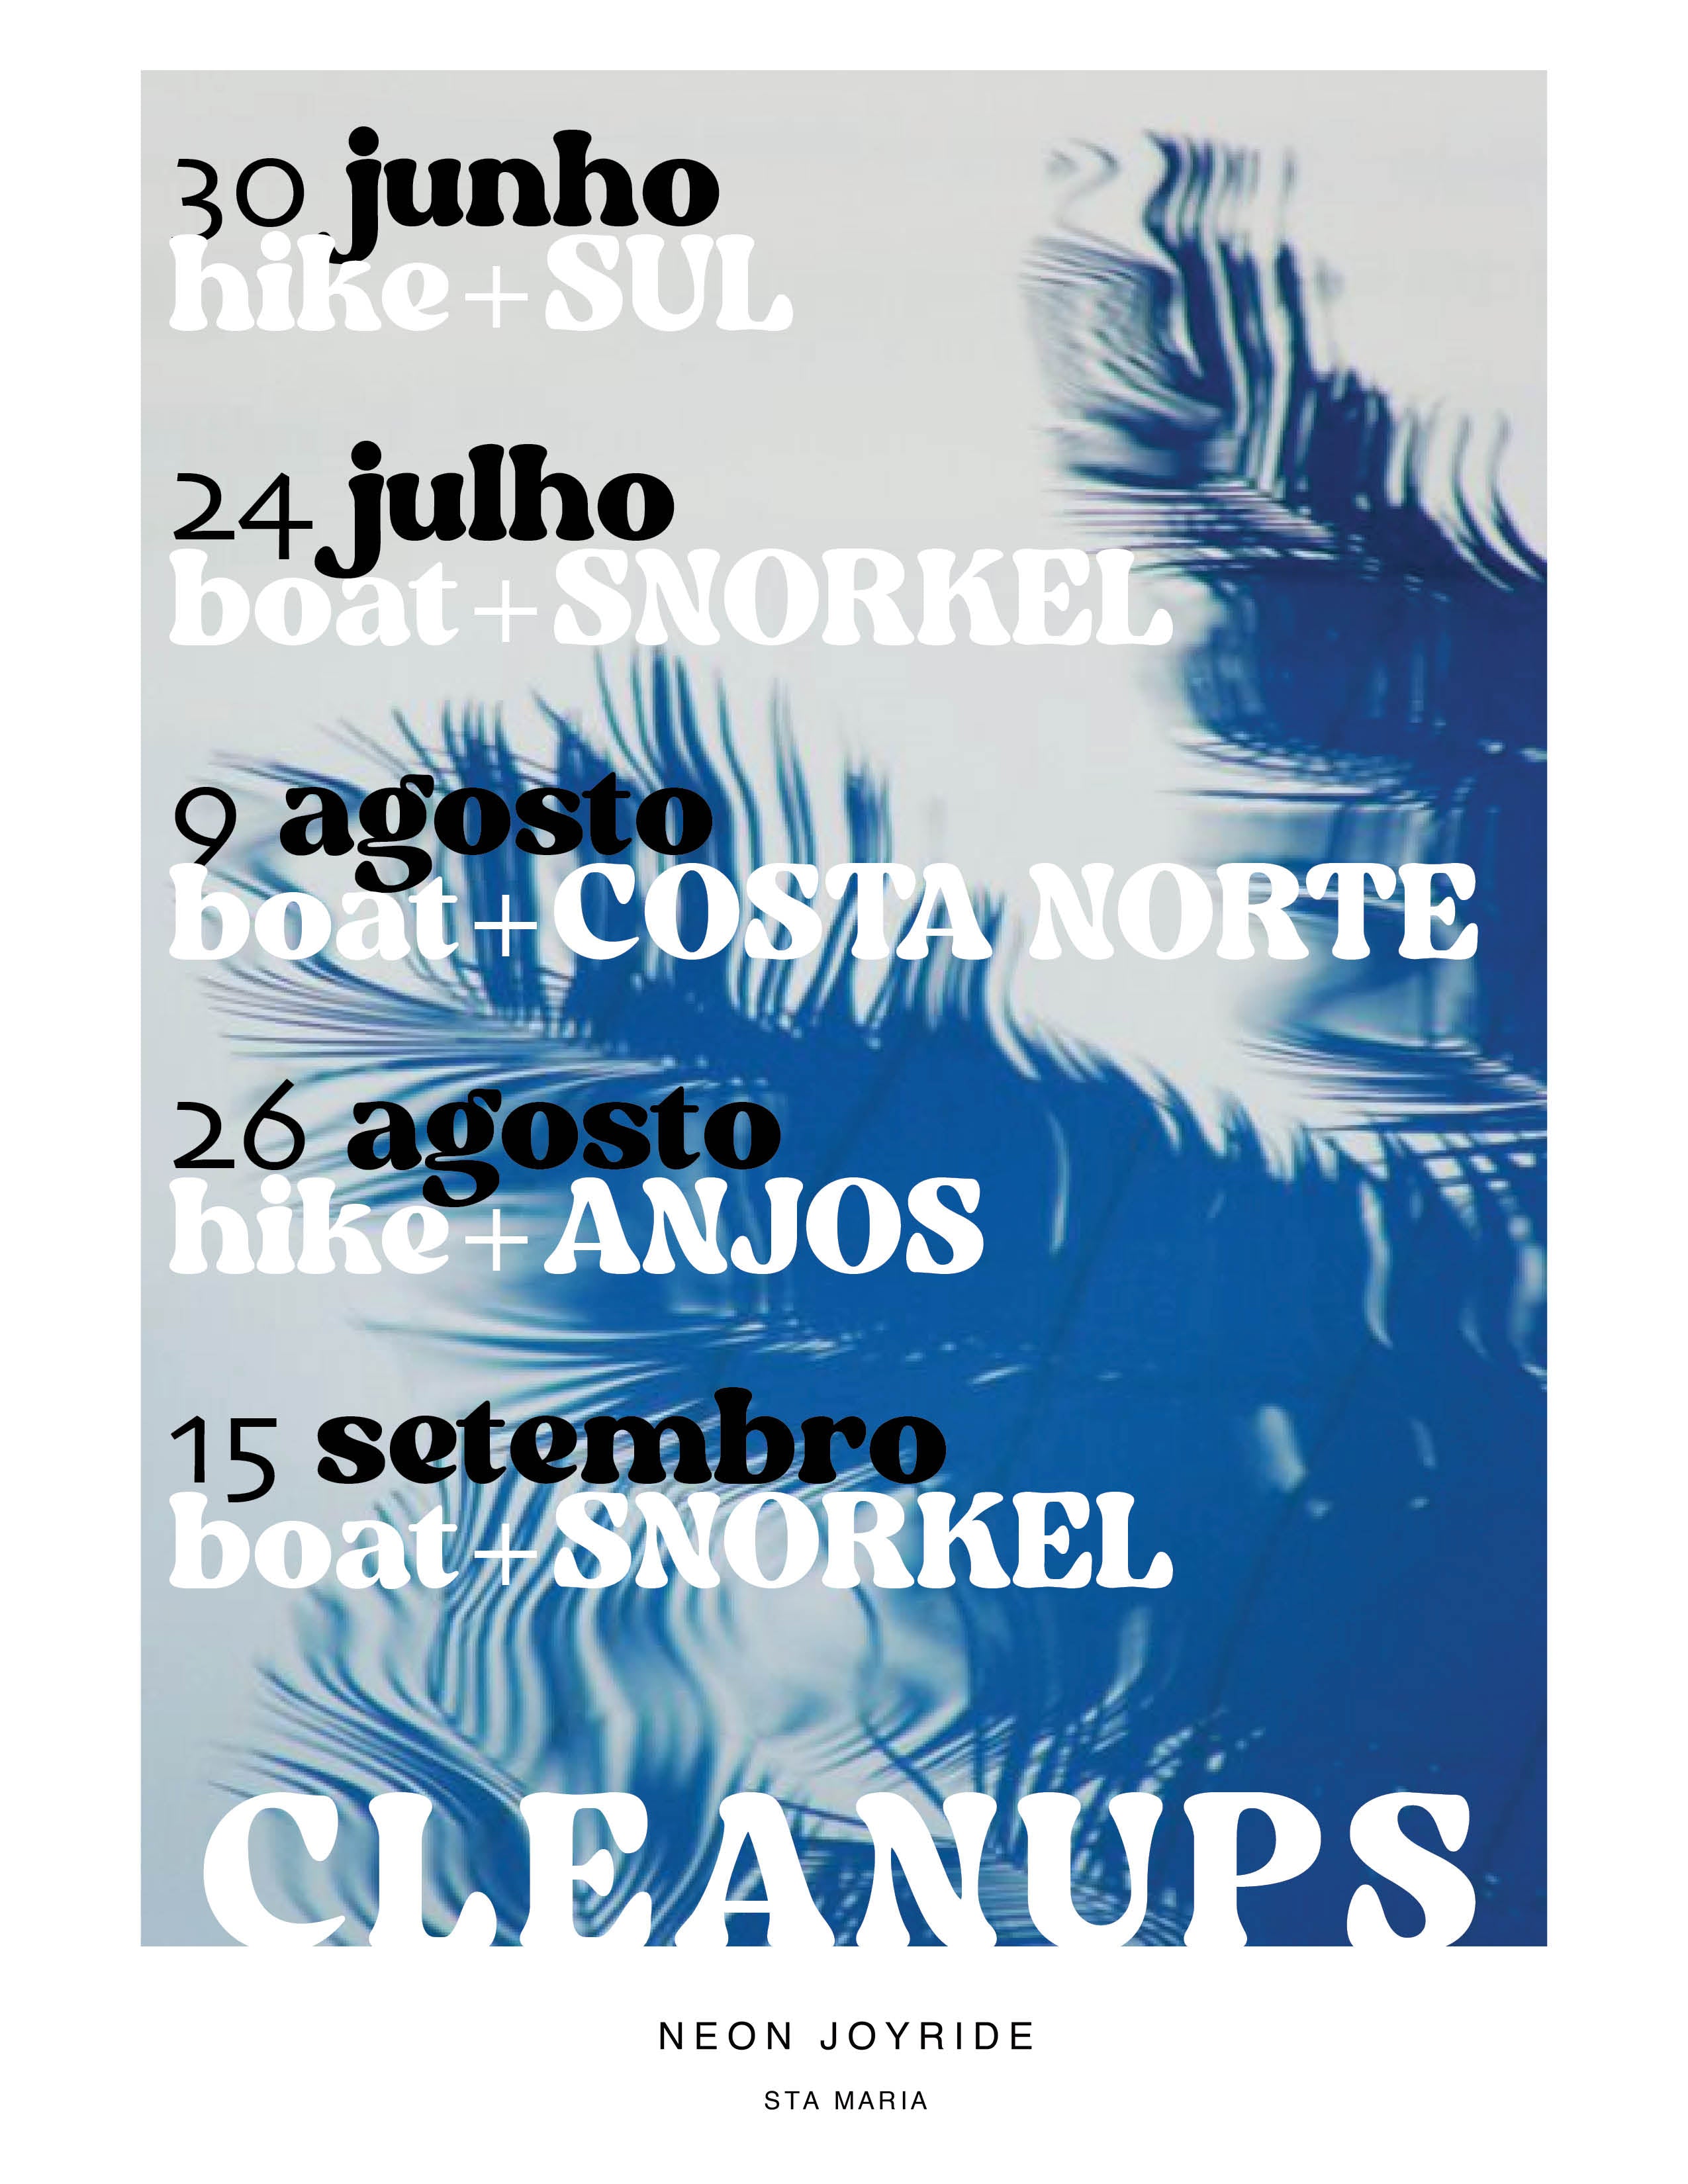 Neon Joyride Coastal Cleanup Schedule Summer 2023 Santa Maria Azores